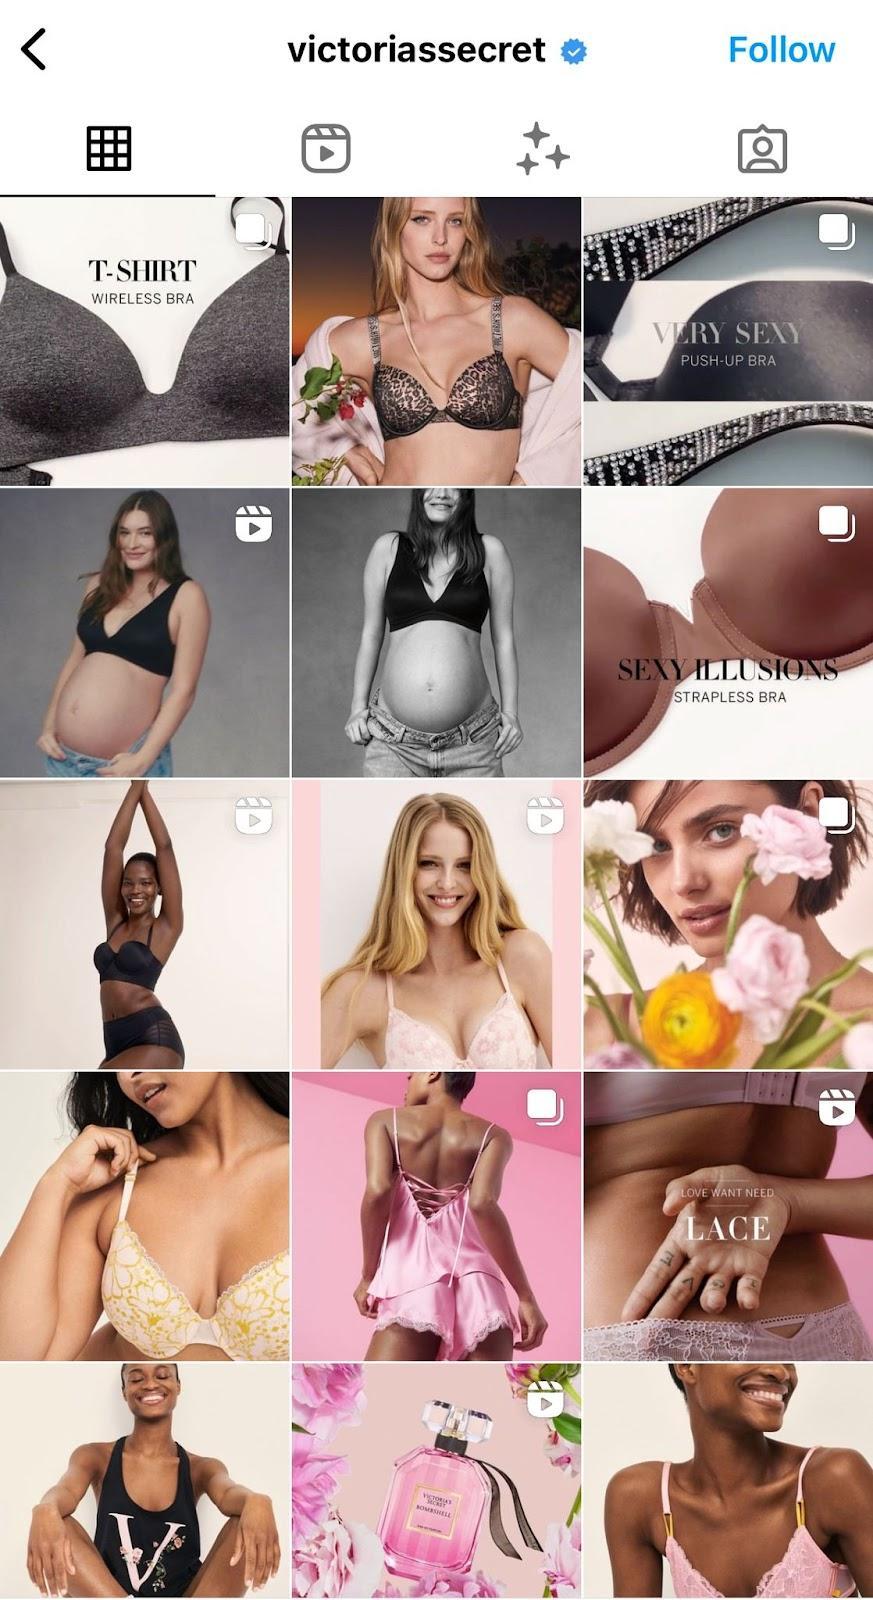 Victoria Secret’s Instagram feed